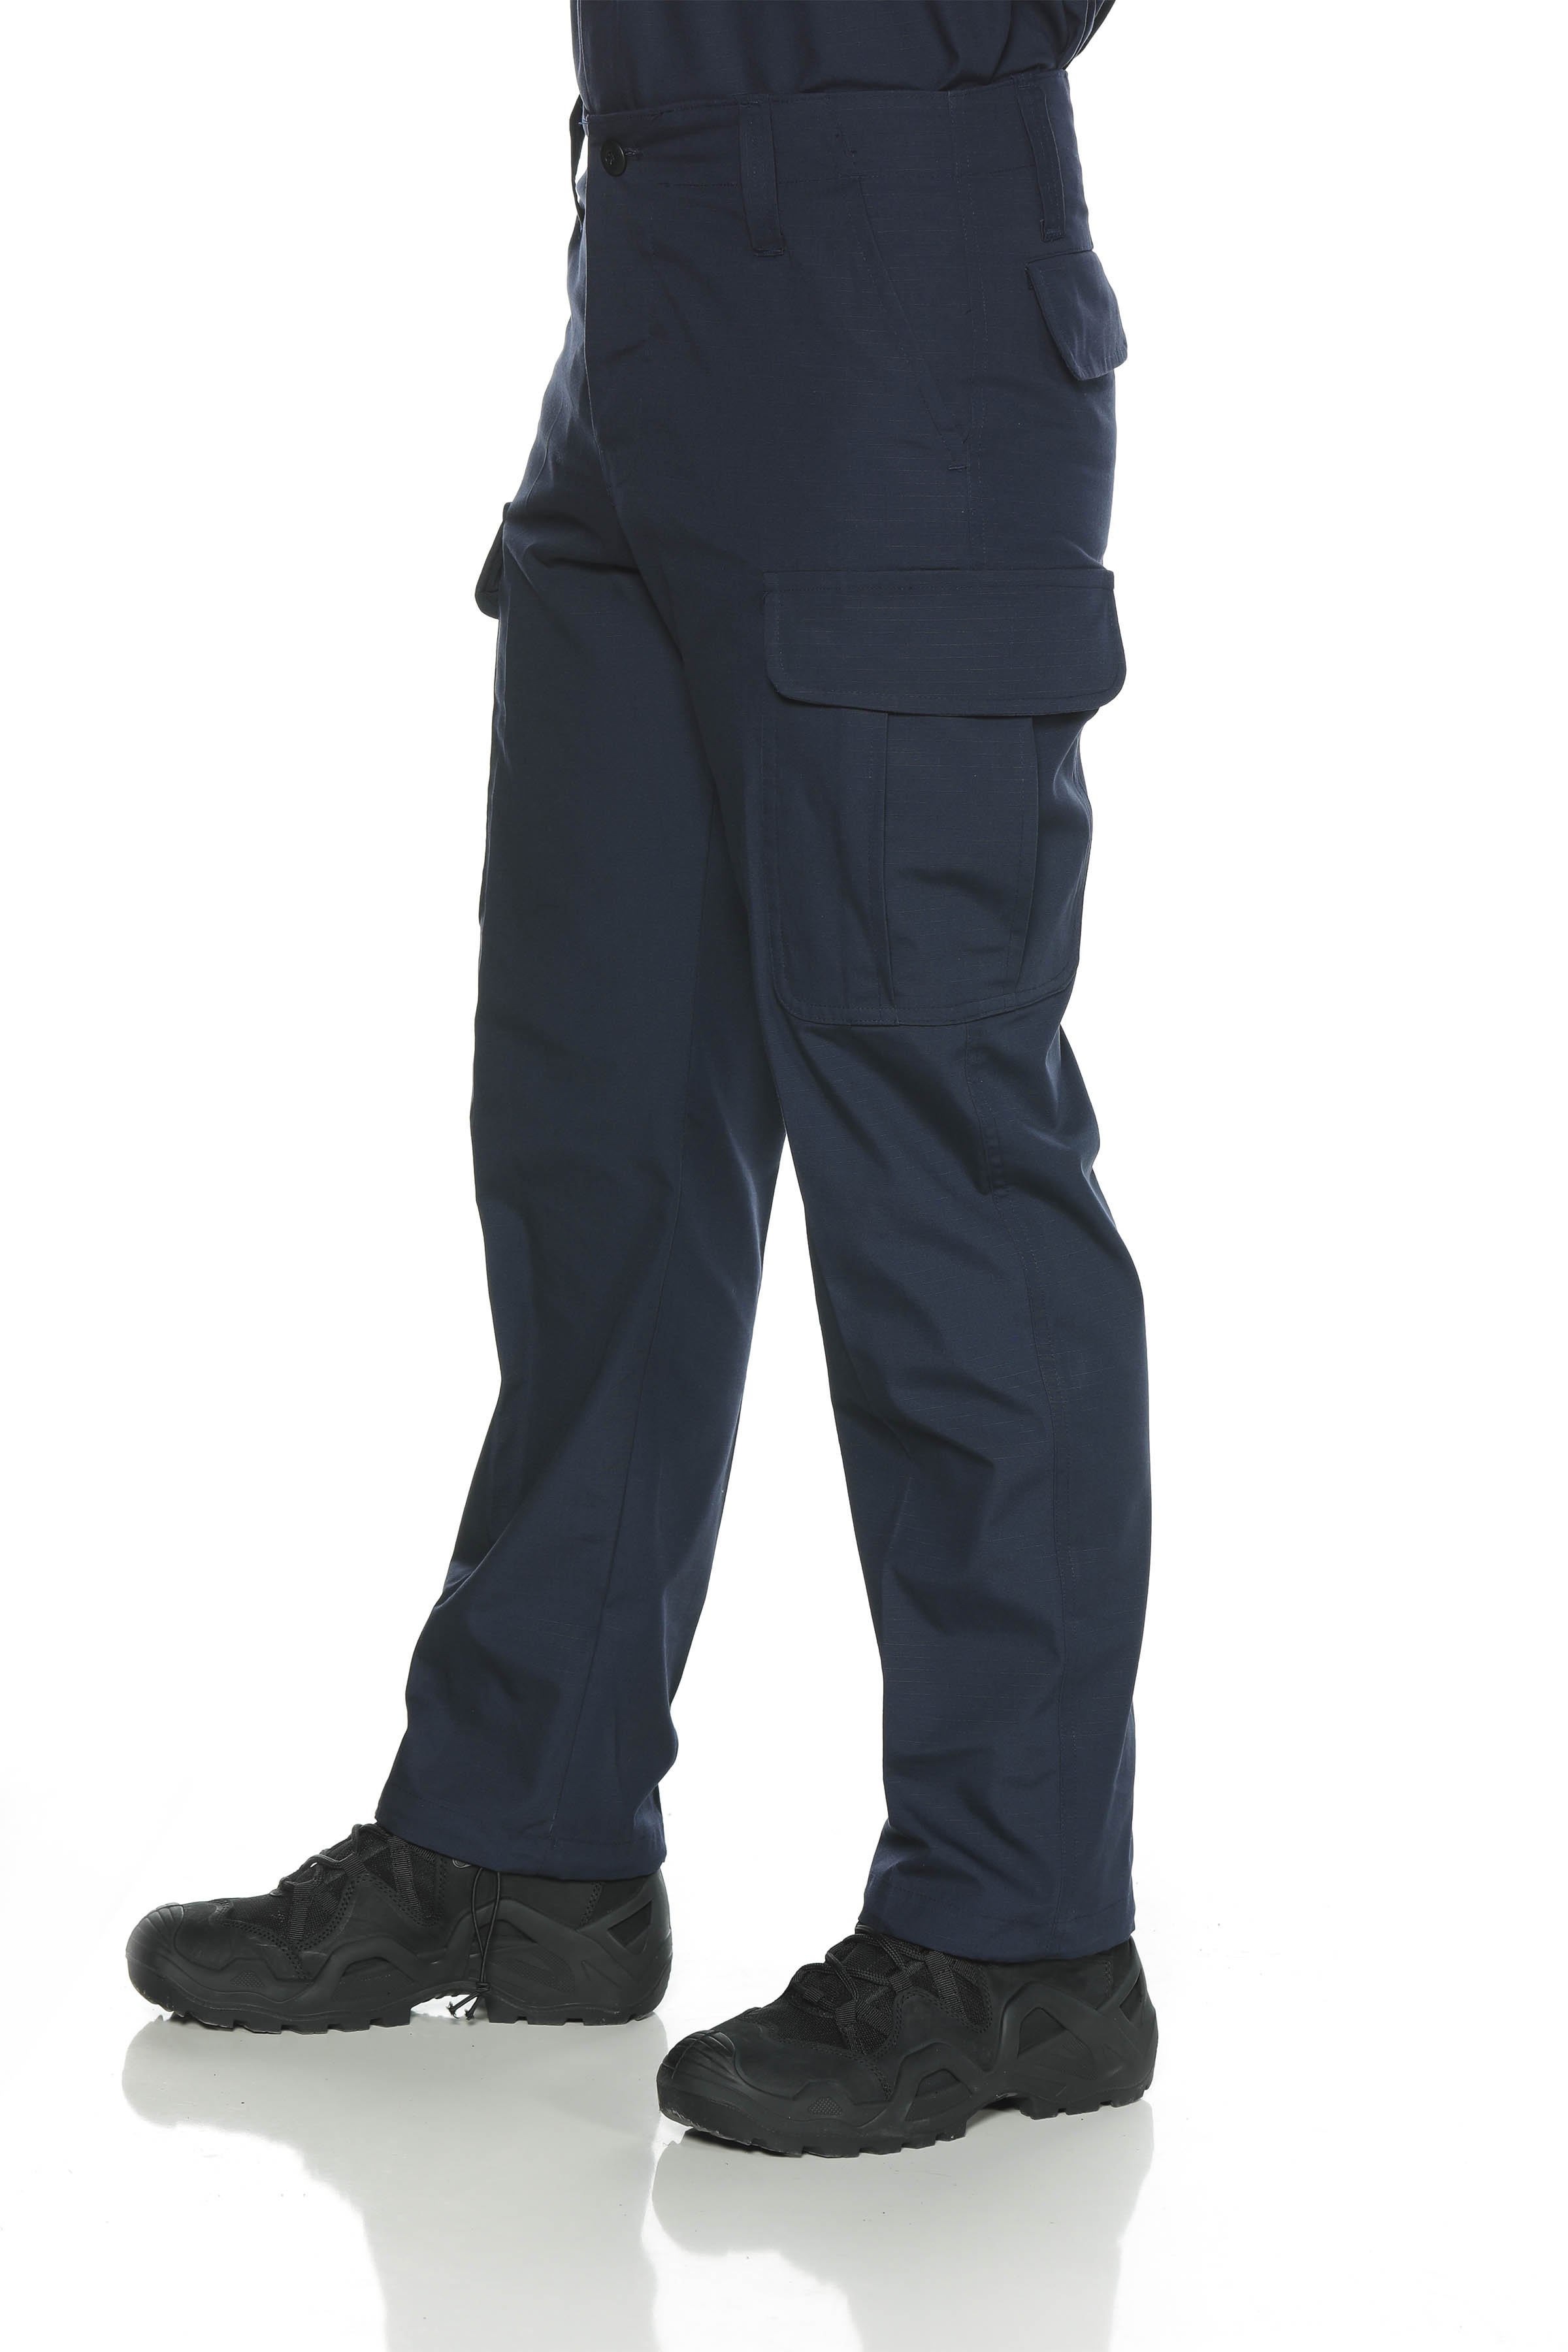 Jandarma Asayiş Orjinal Yeni Tip Lacivert Pantolon 